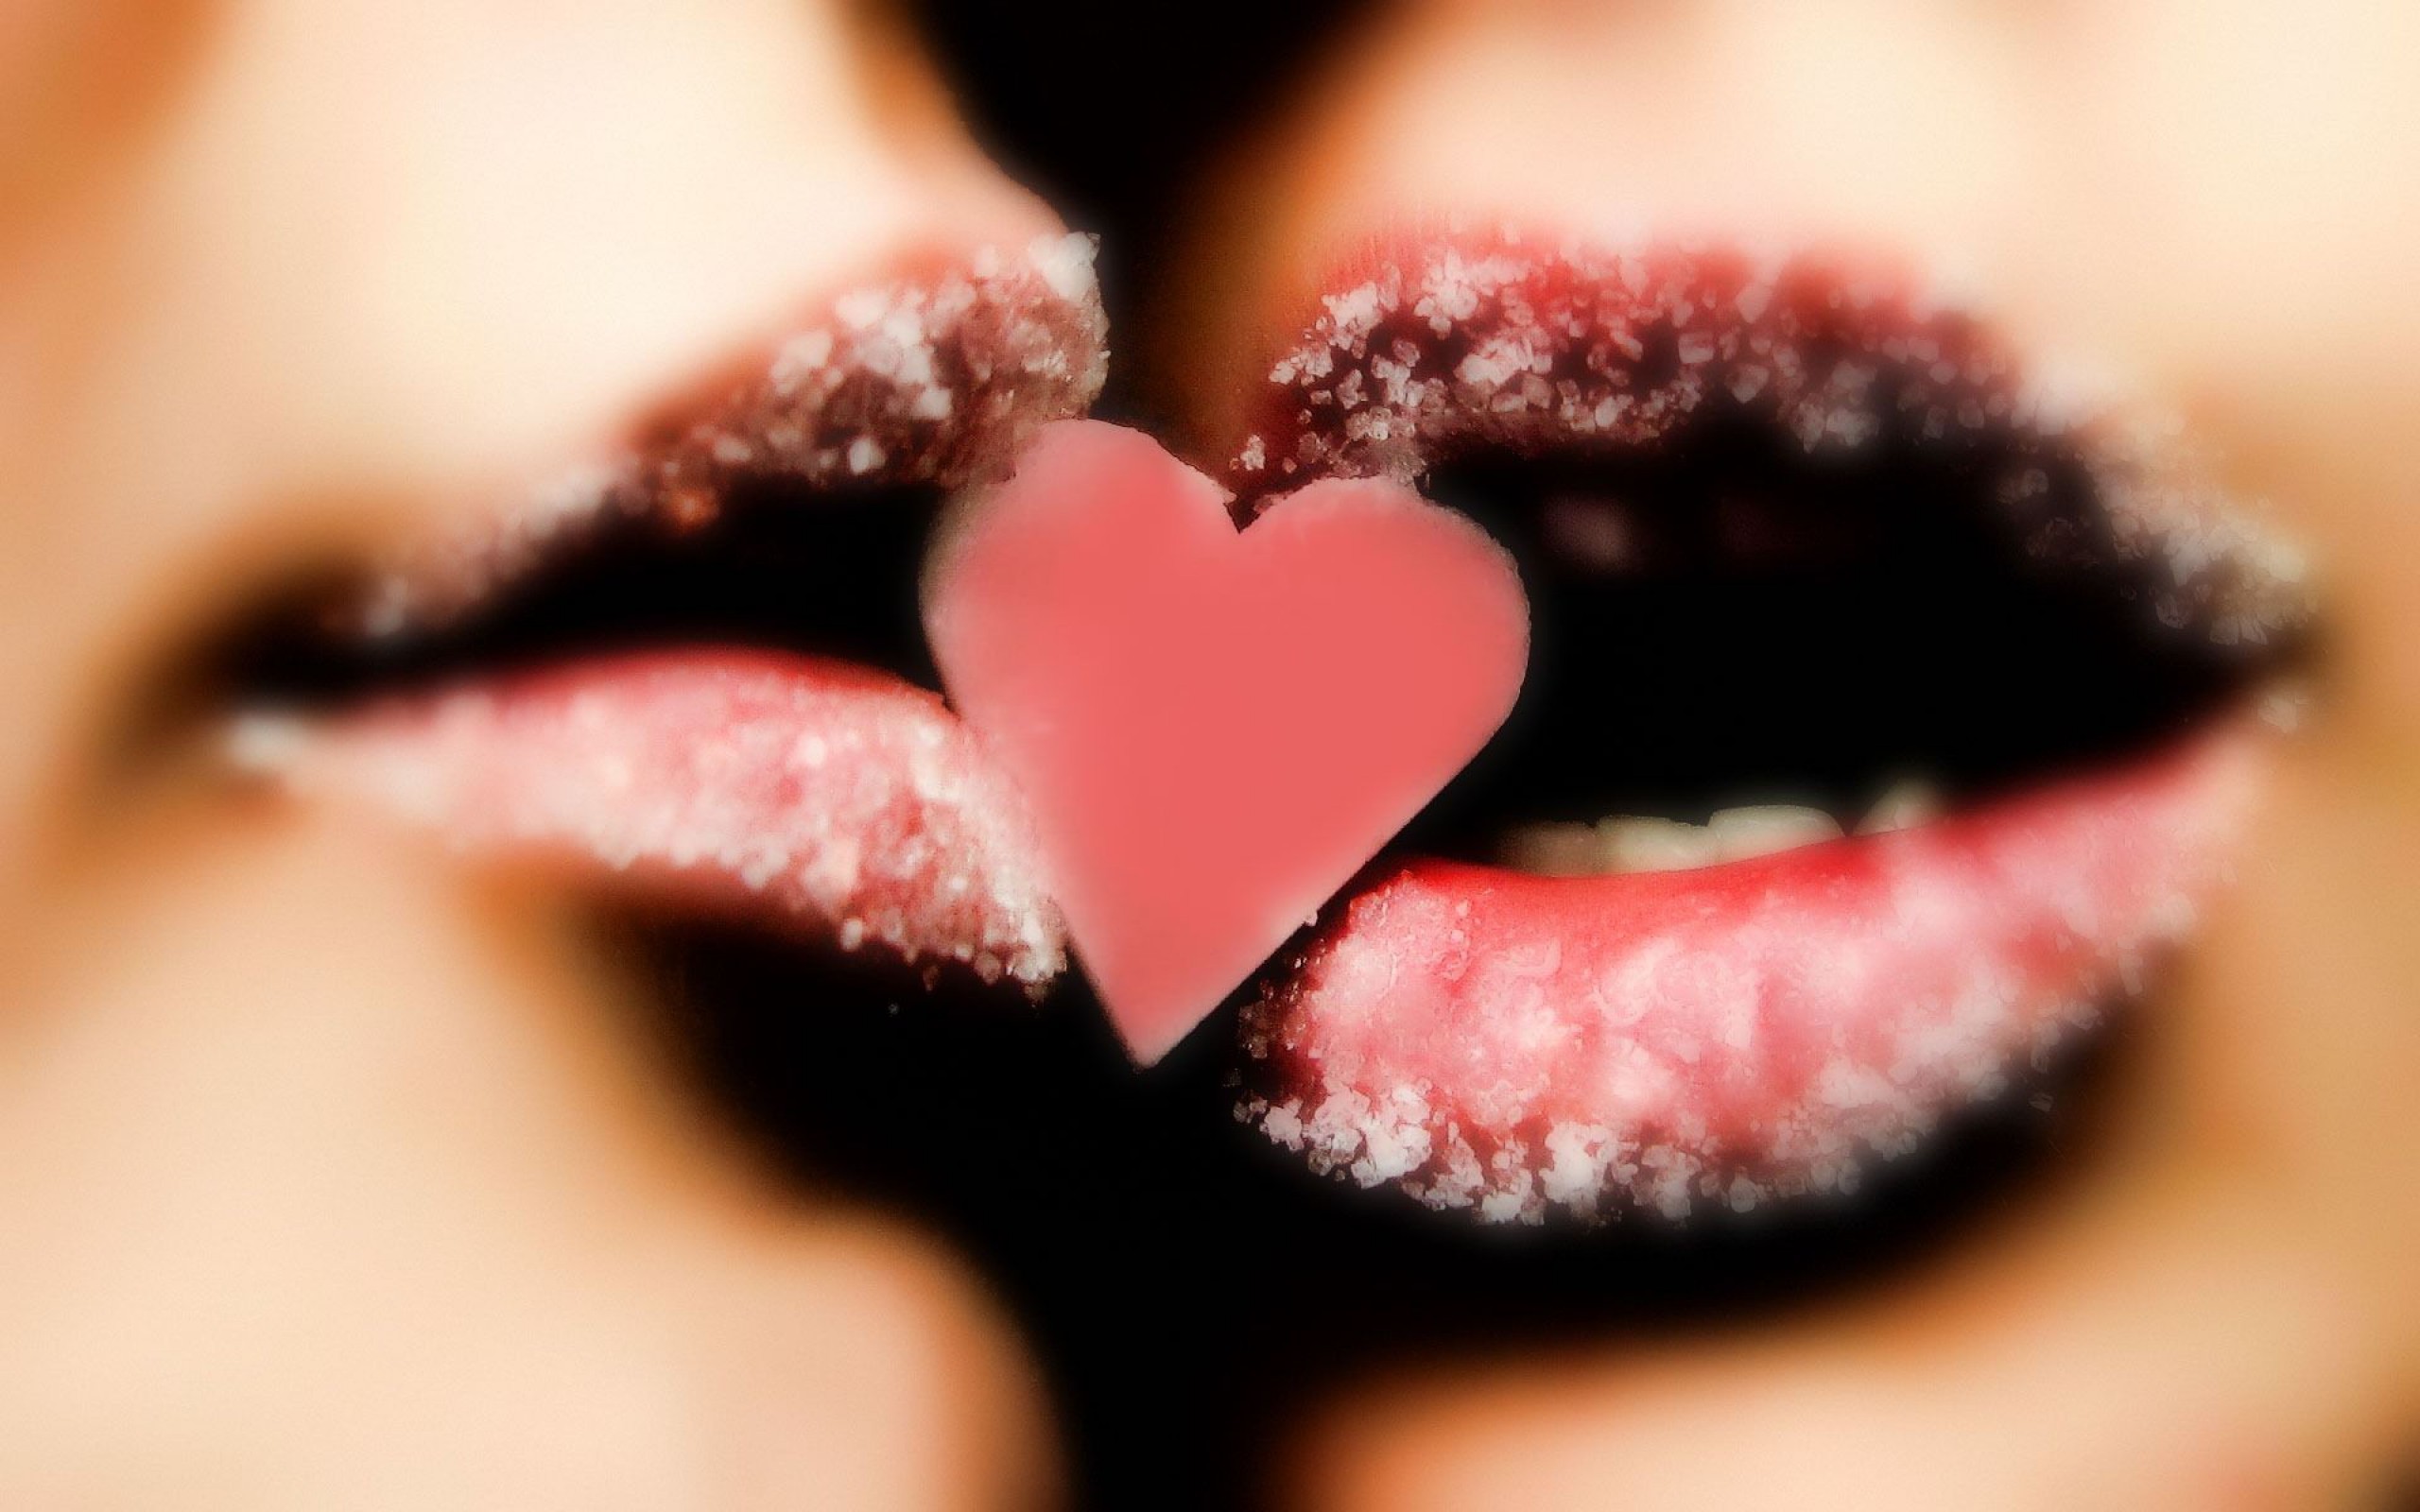 2560x1600 Sweet Lips Love Kiss Wallpaper